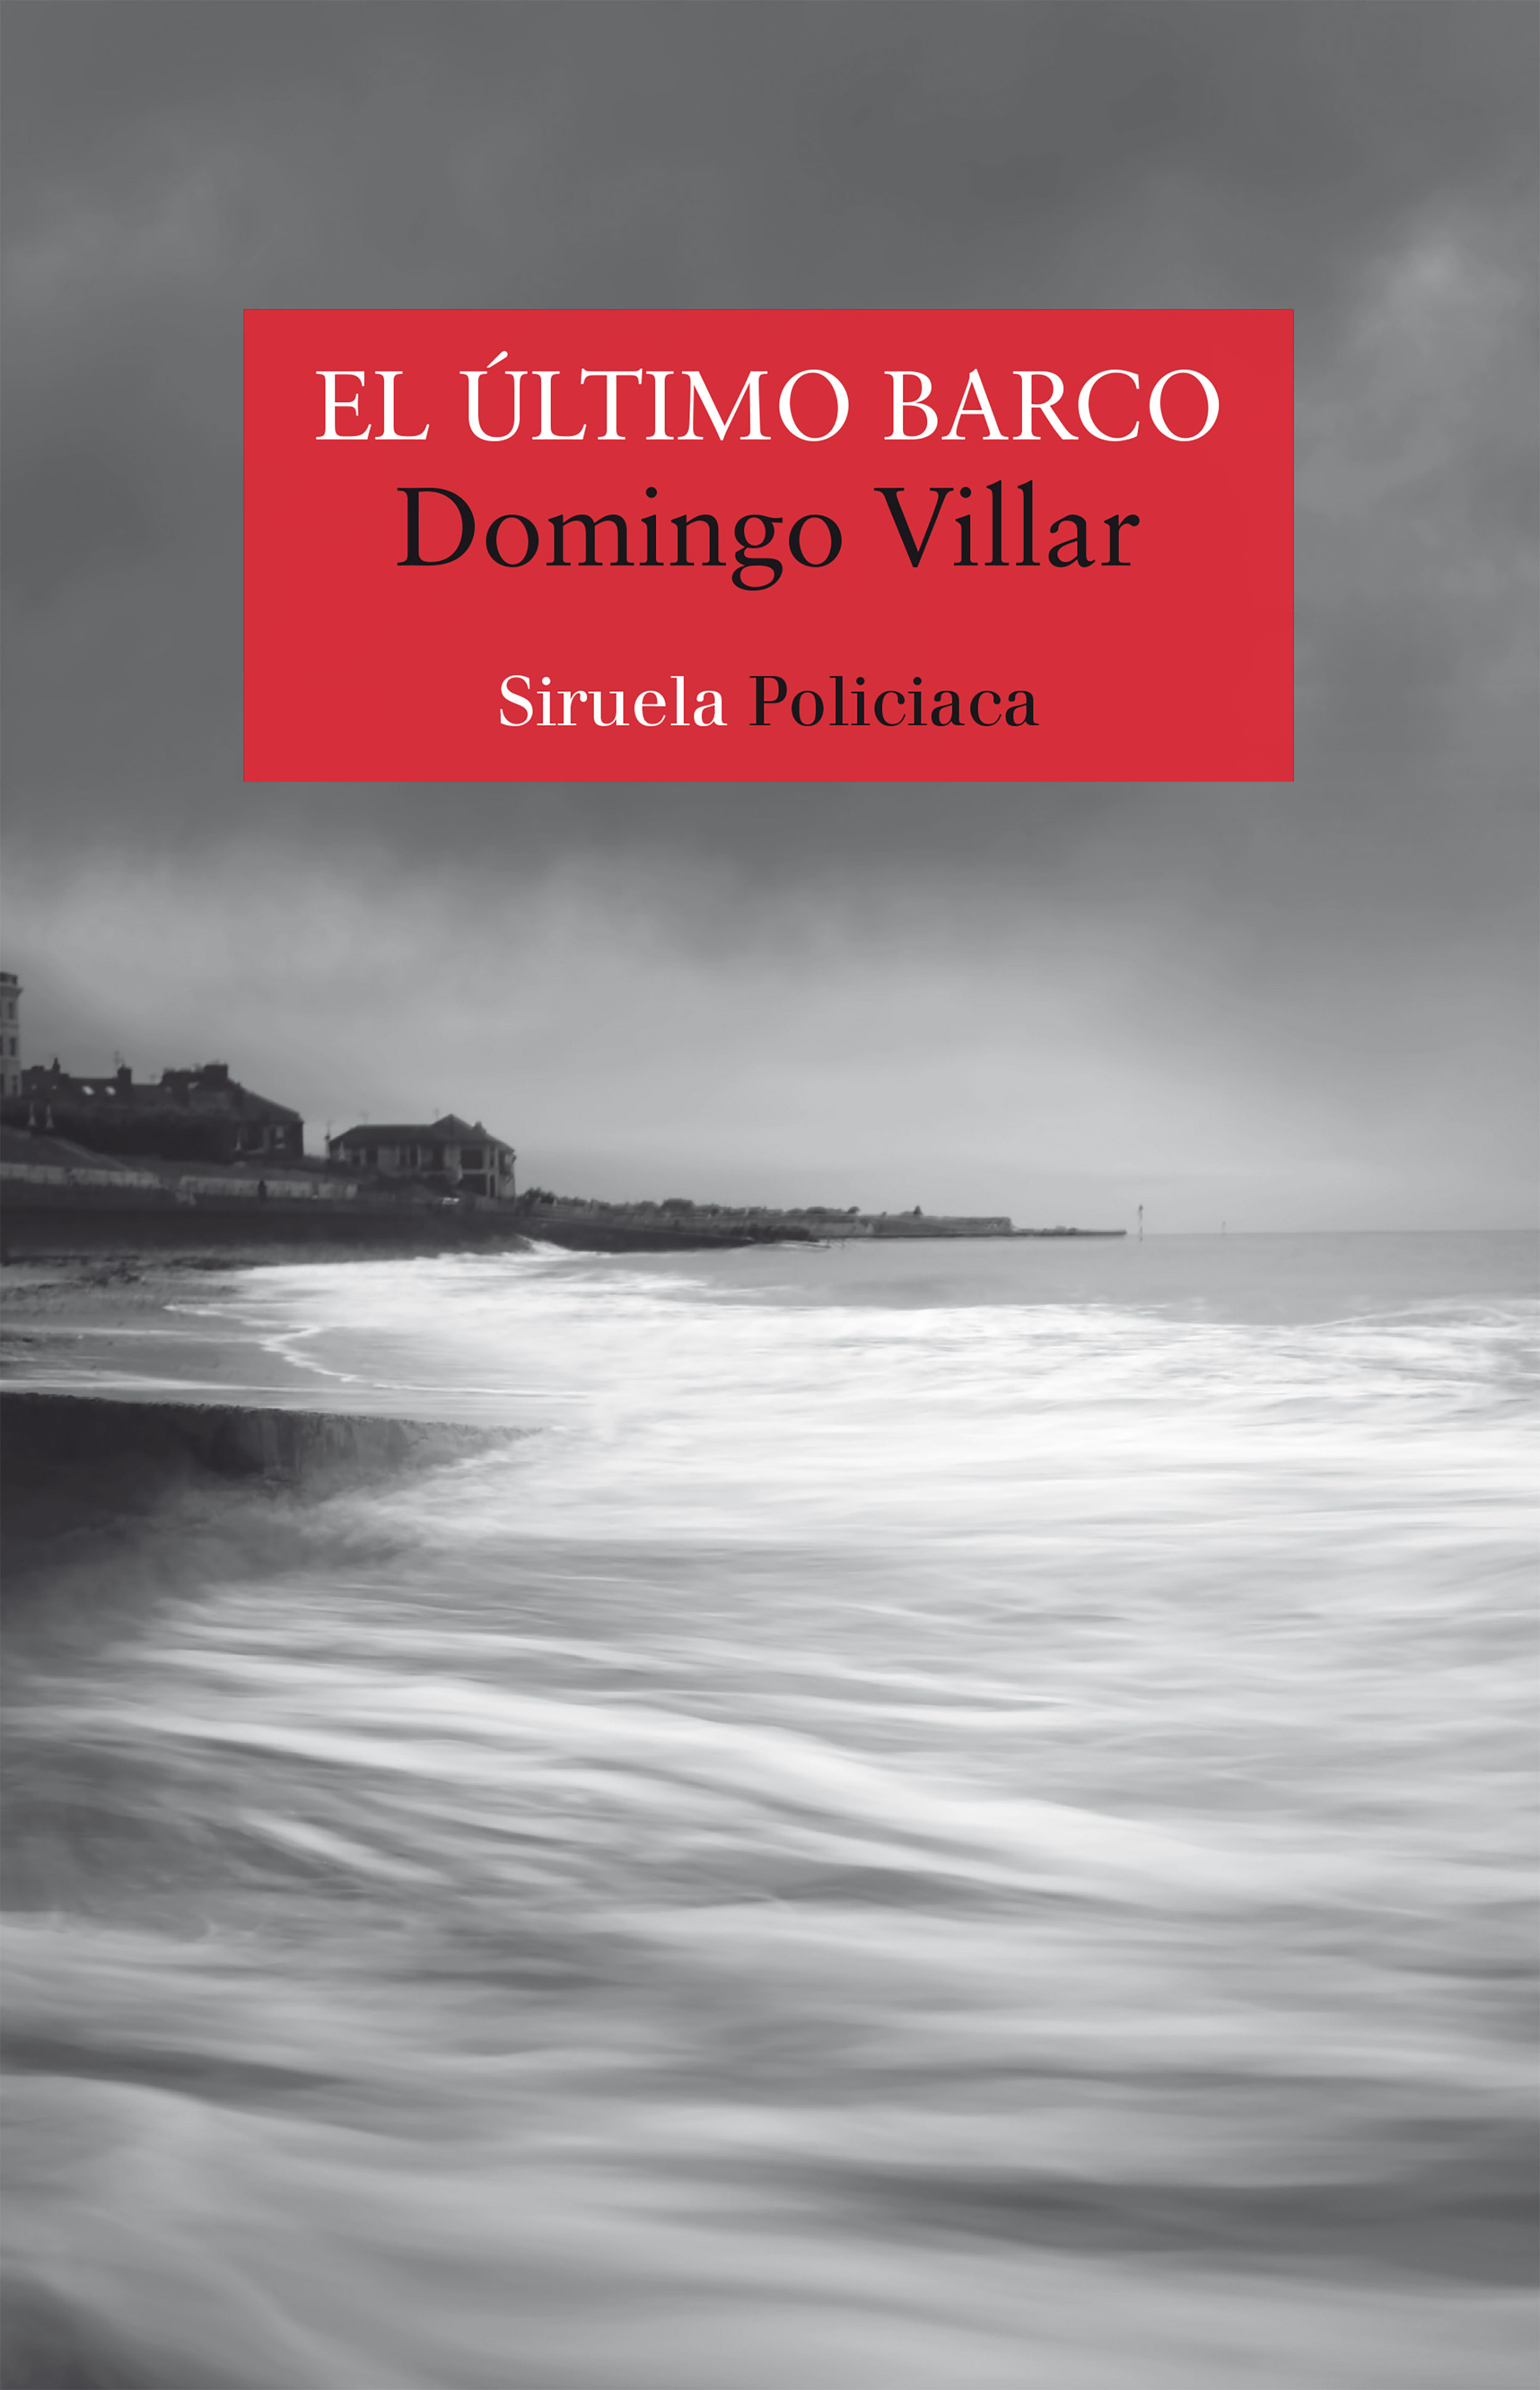 El último barco, Domingo Villar, novela